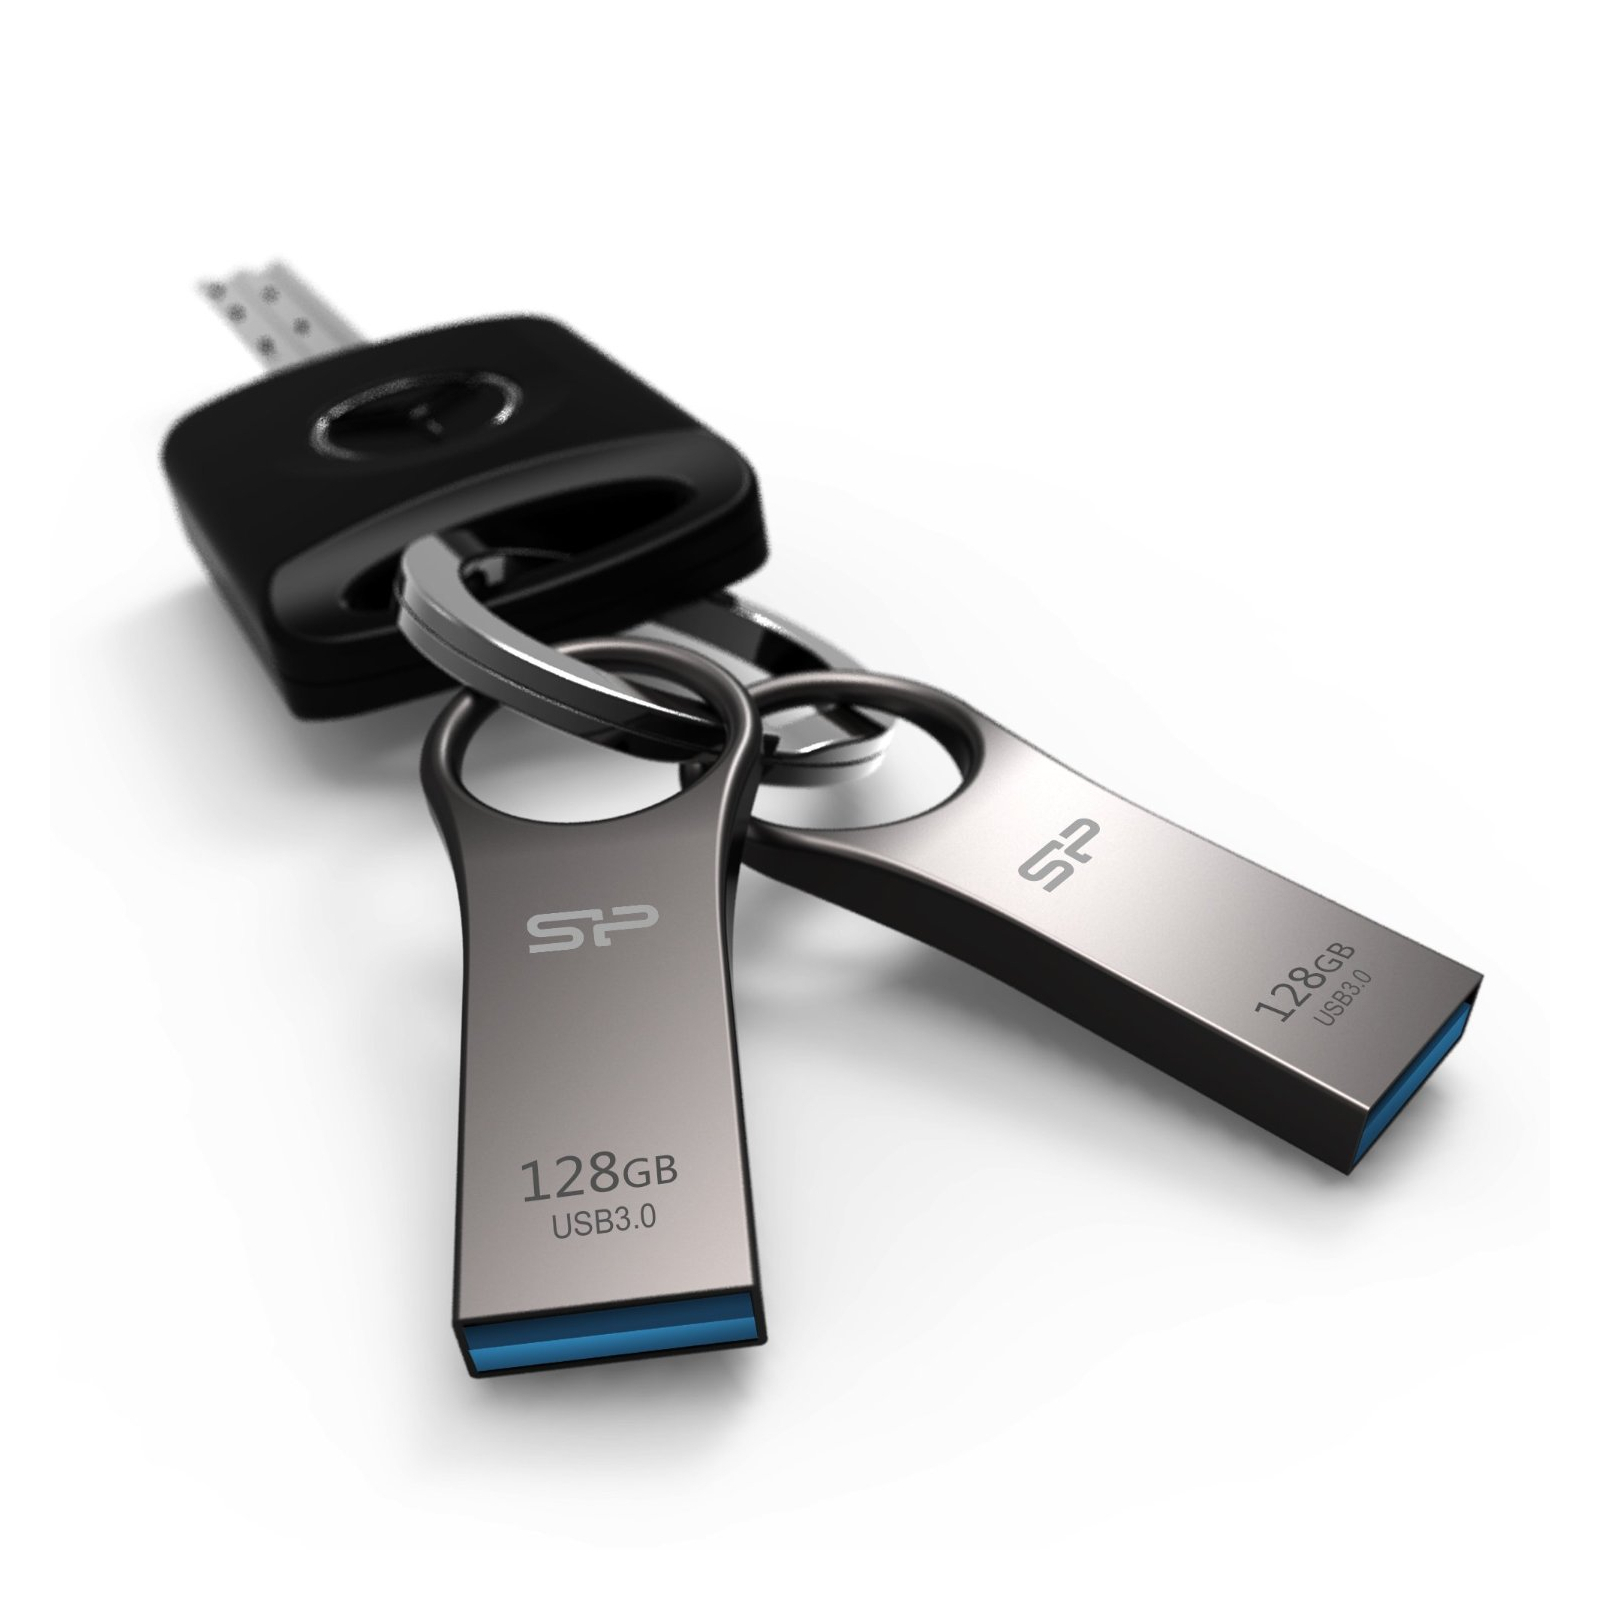 USB флеш накопитель Silicon Power 64GB Jewel J80 Titanium USB 3.0 (SP064GBUF3J80V1T) изображение 5